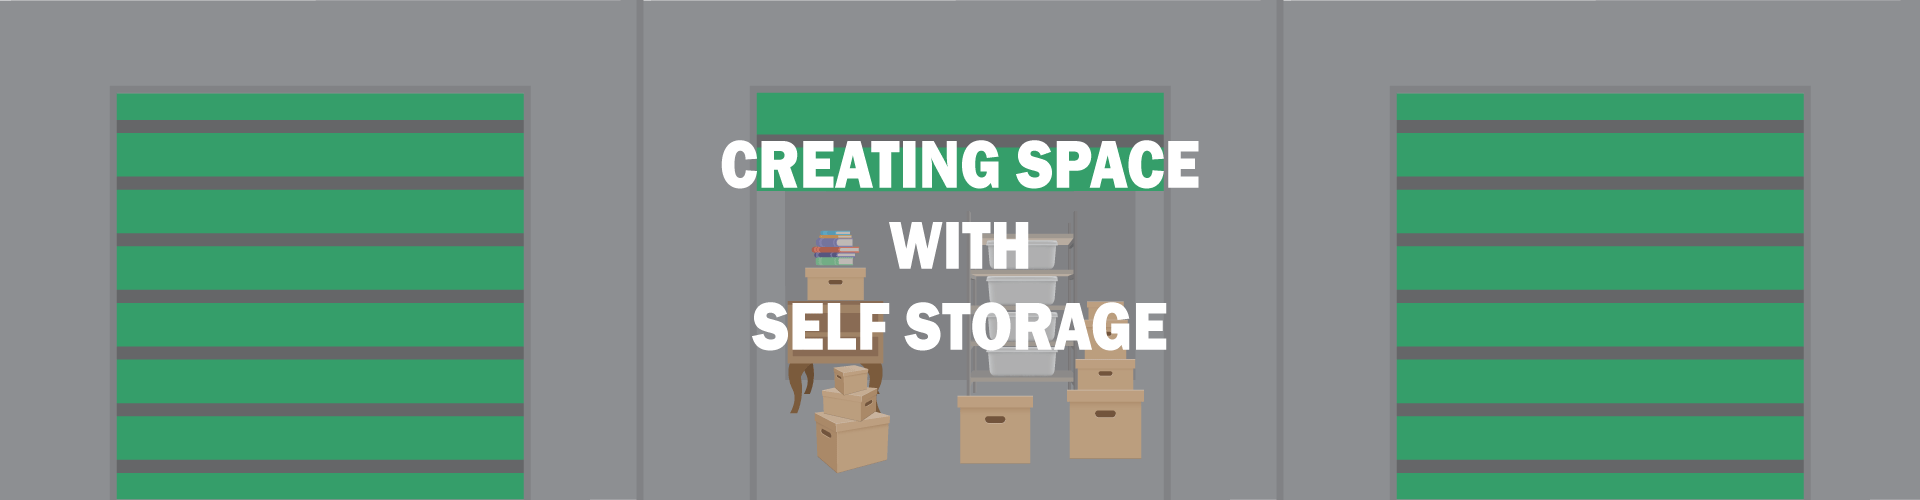 Creating Space With Self Storage hero image